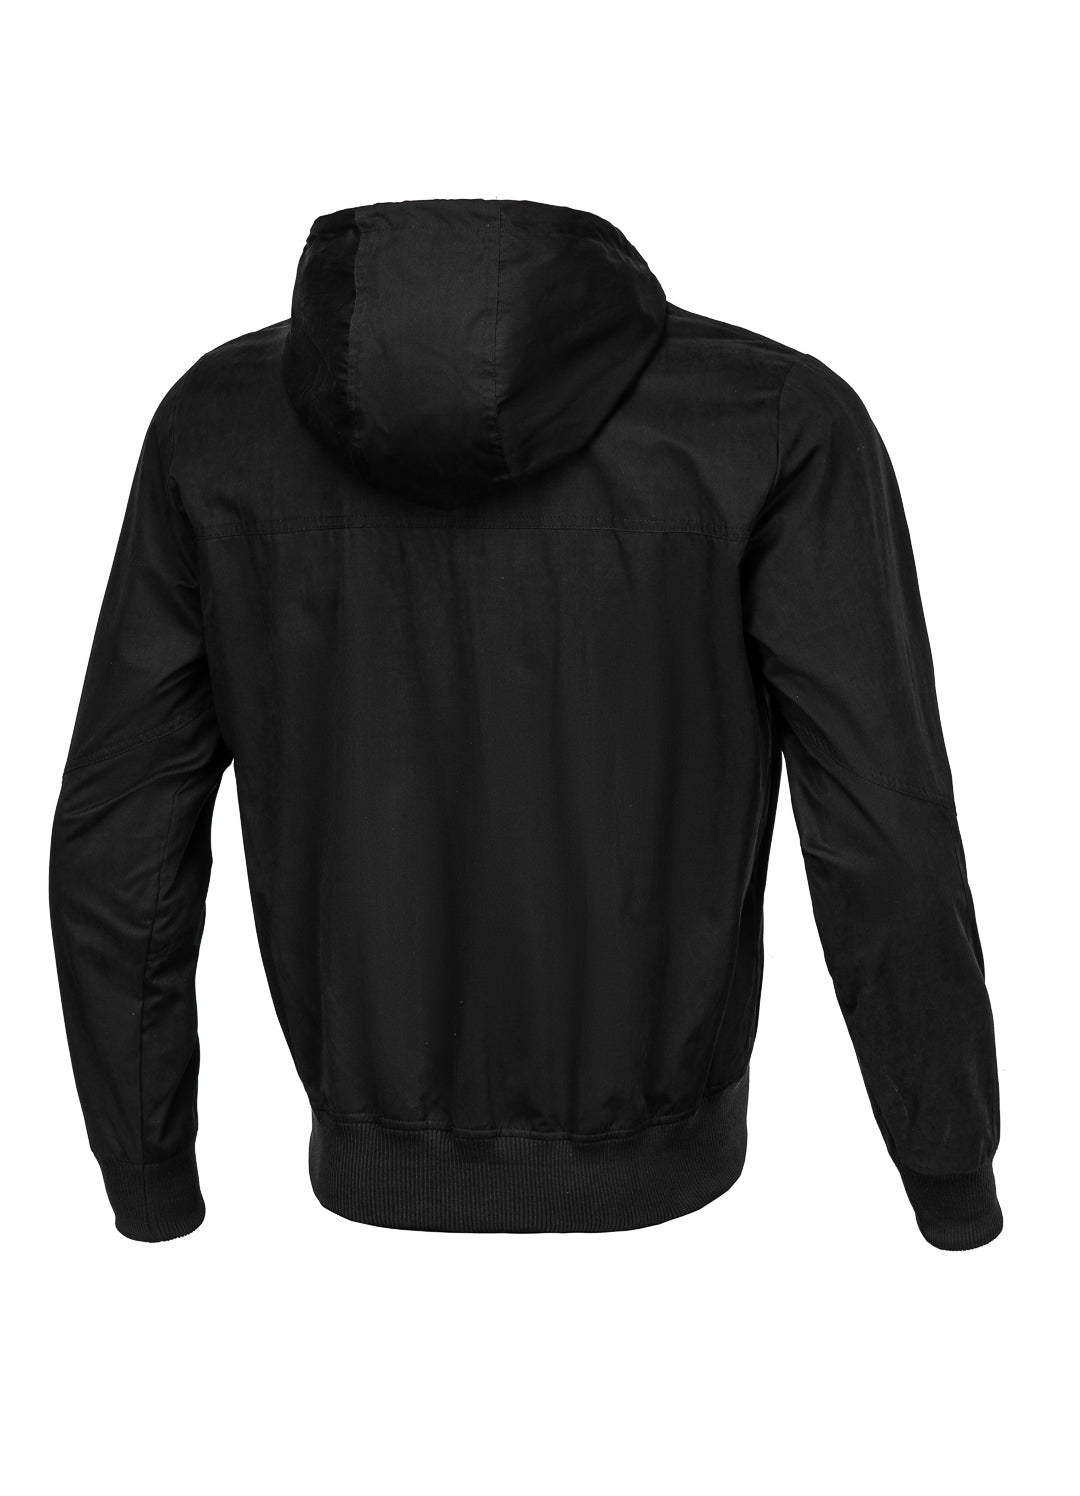 Hooded Jacket ARILLO Black - Pitbull West Coast International Store 